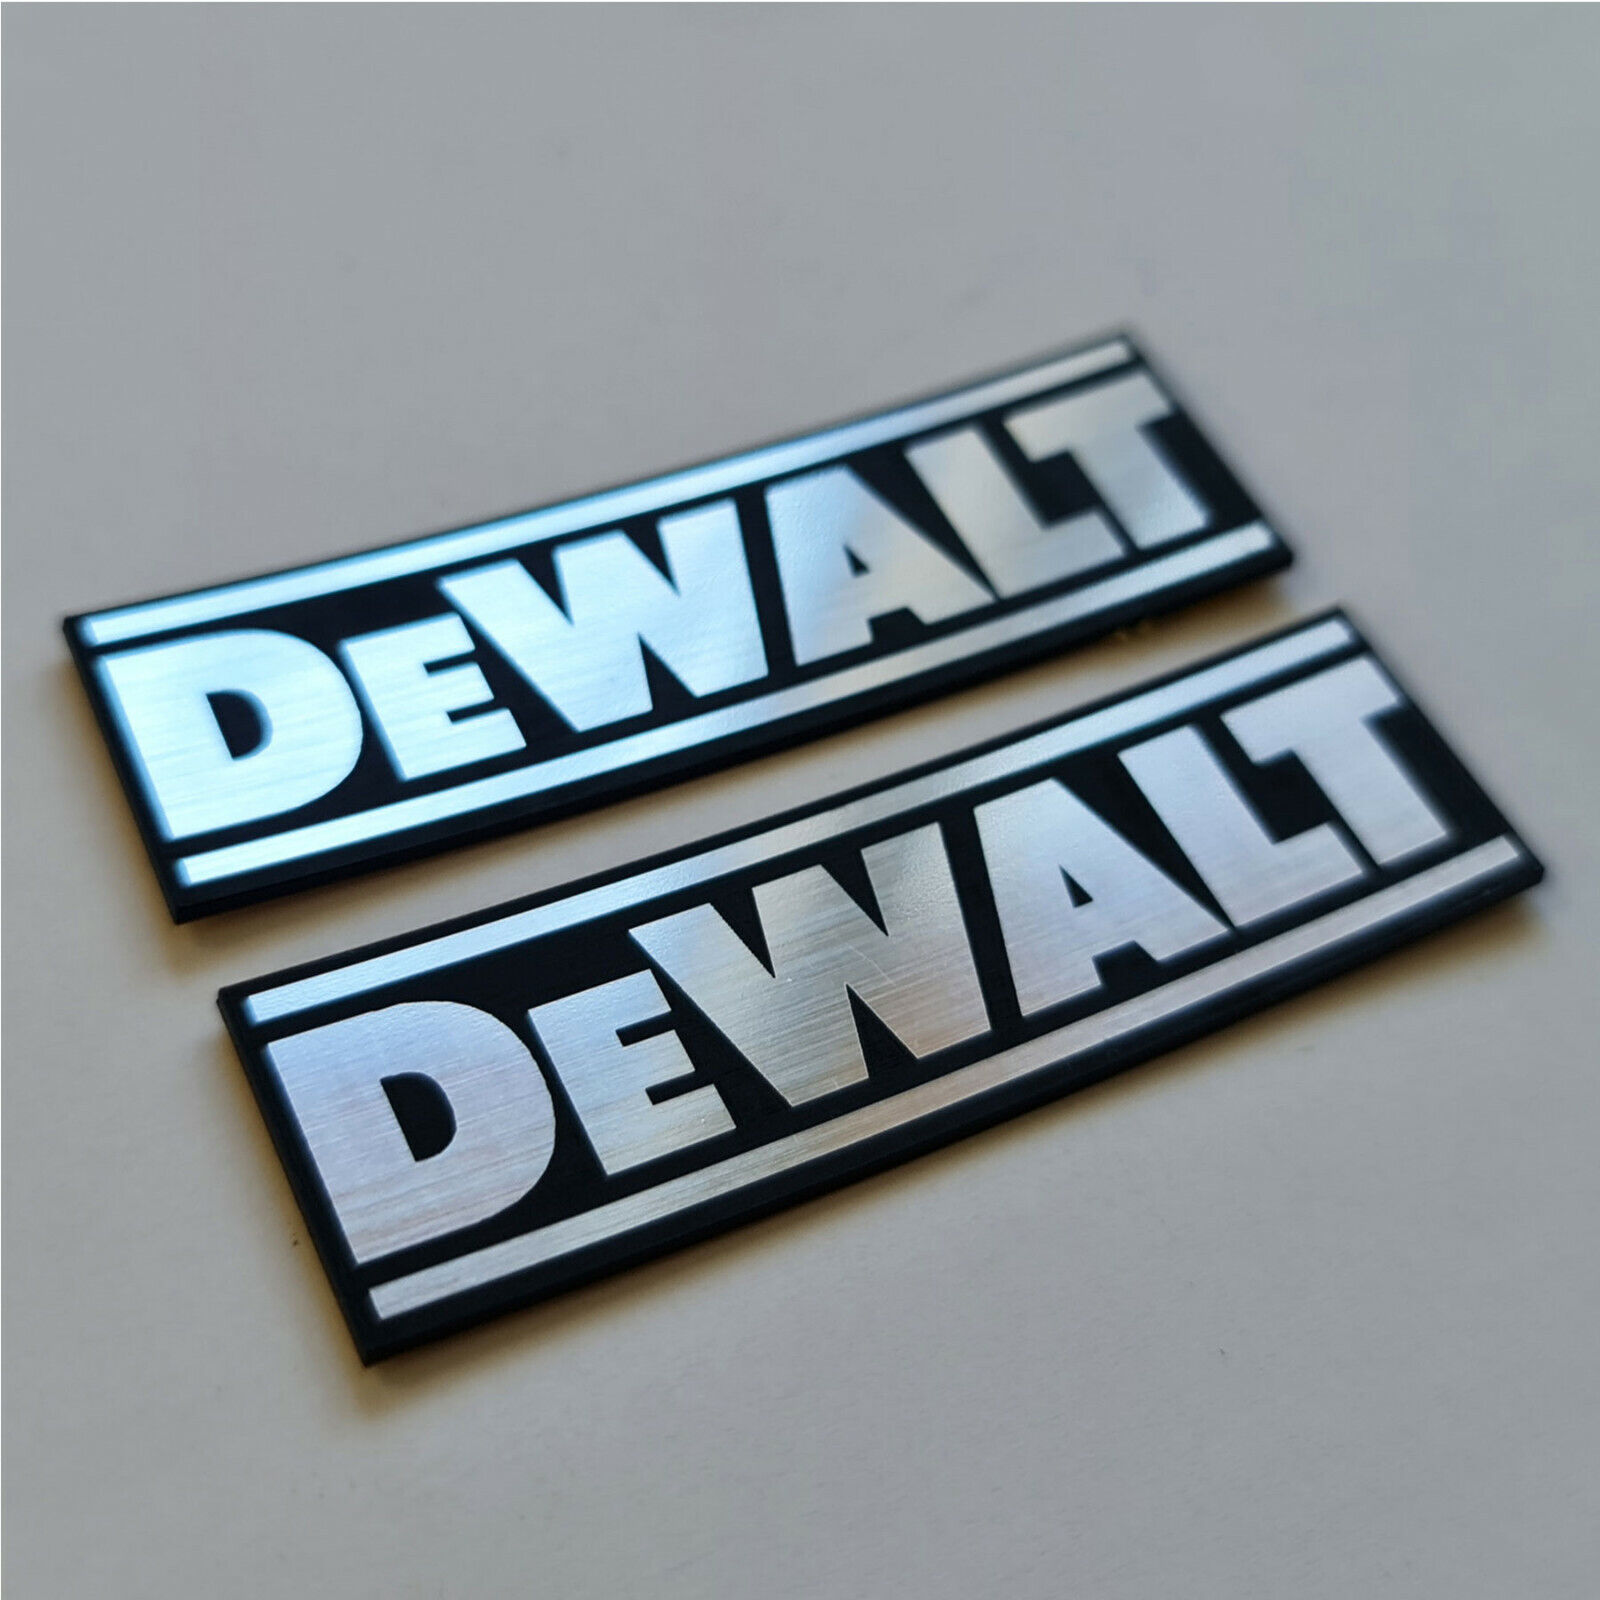 DeWalt - Sticker Case Badge Decal - Chrome Reflective - Two Emblems  Unbranded Does Not Apply